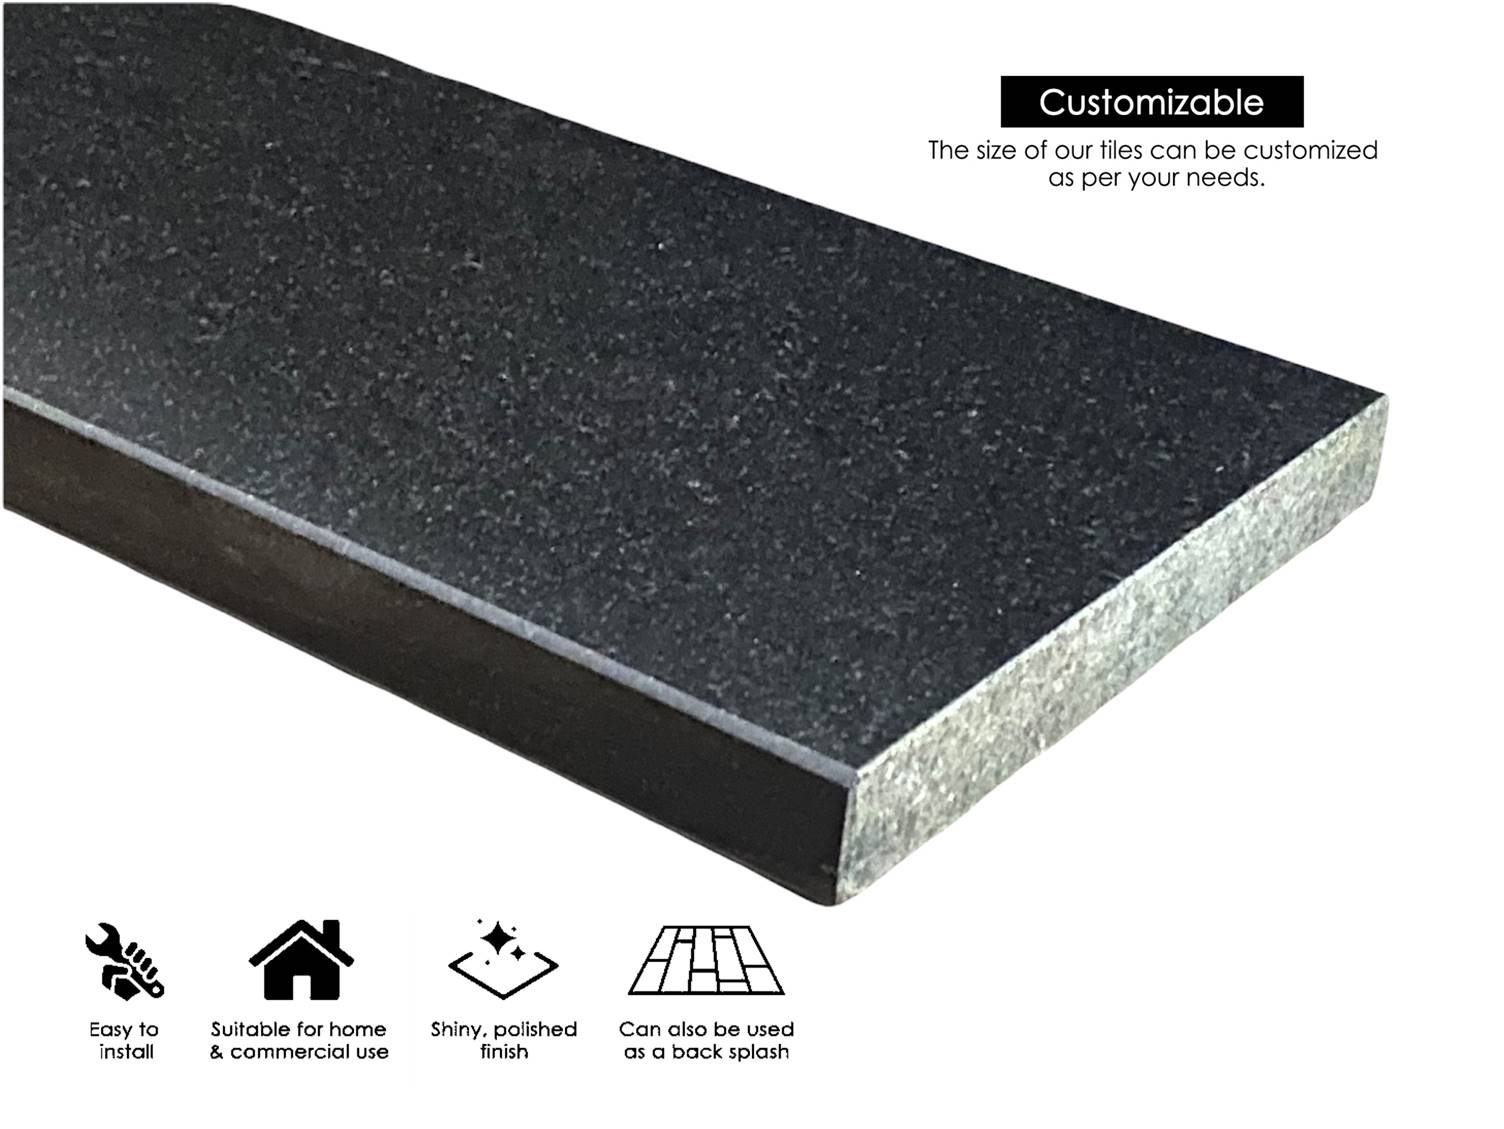 Tenedos Black Absolute Granite Marble Floor Transition Doorway Threshold Tile (Marble Saddle) Polished for Shower Curb, Window Sill, Vanity Backsplash